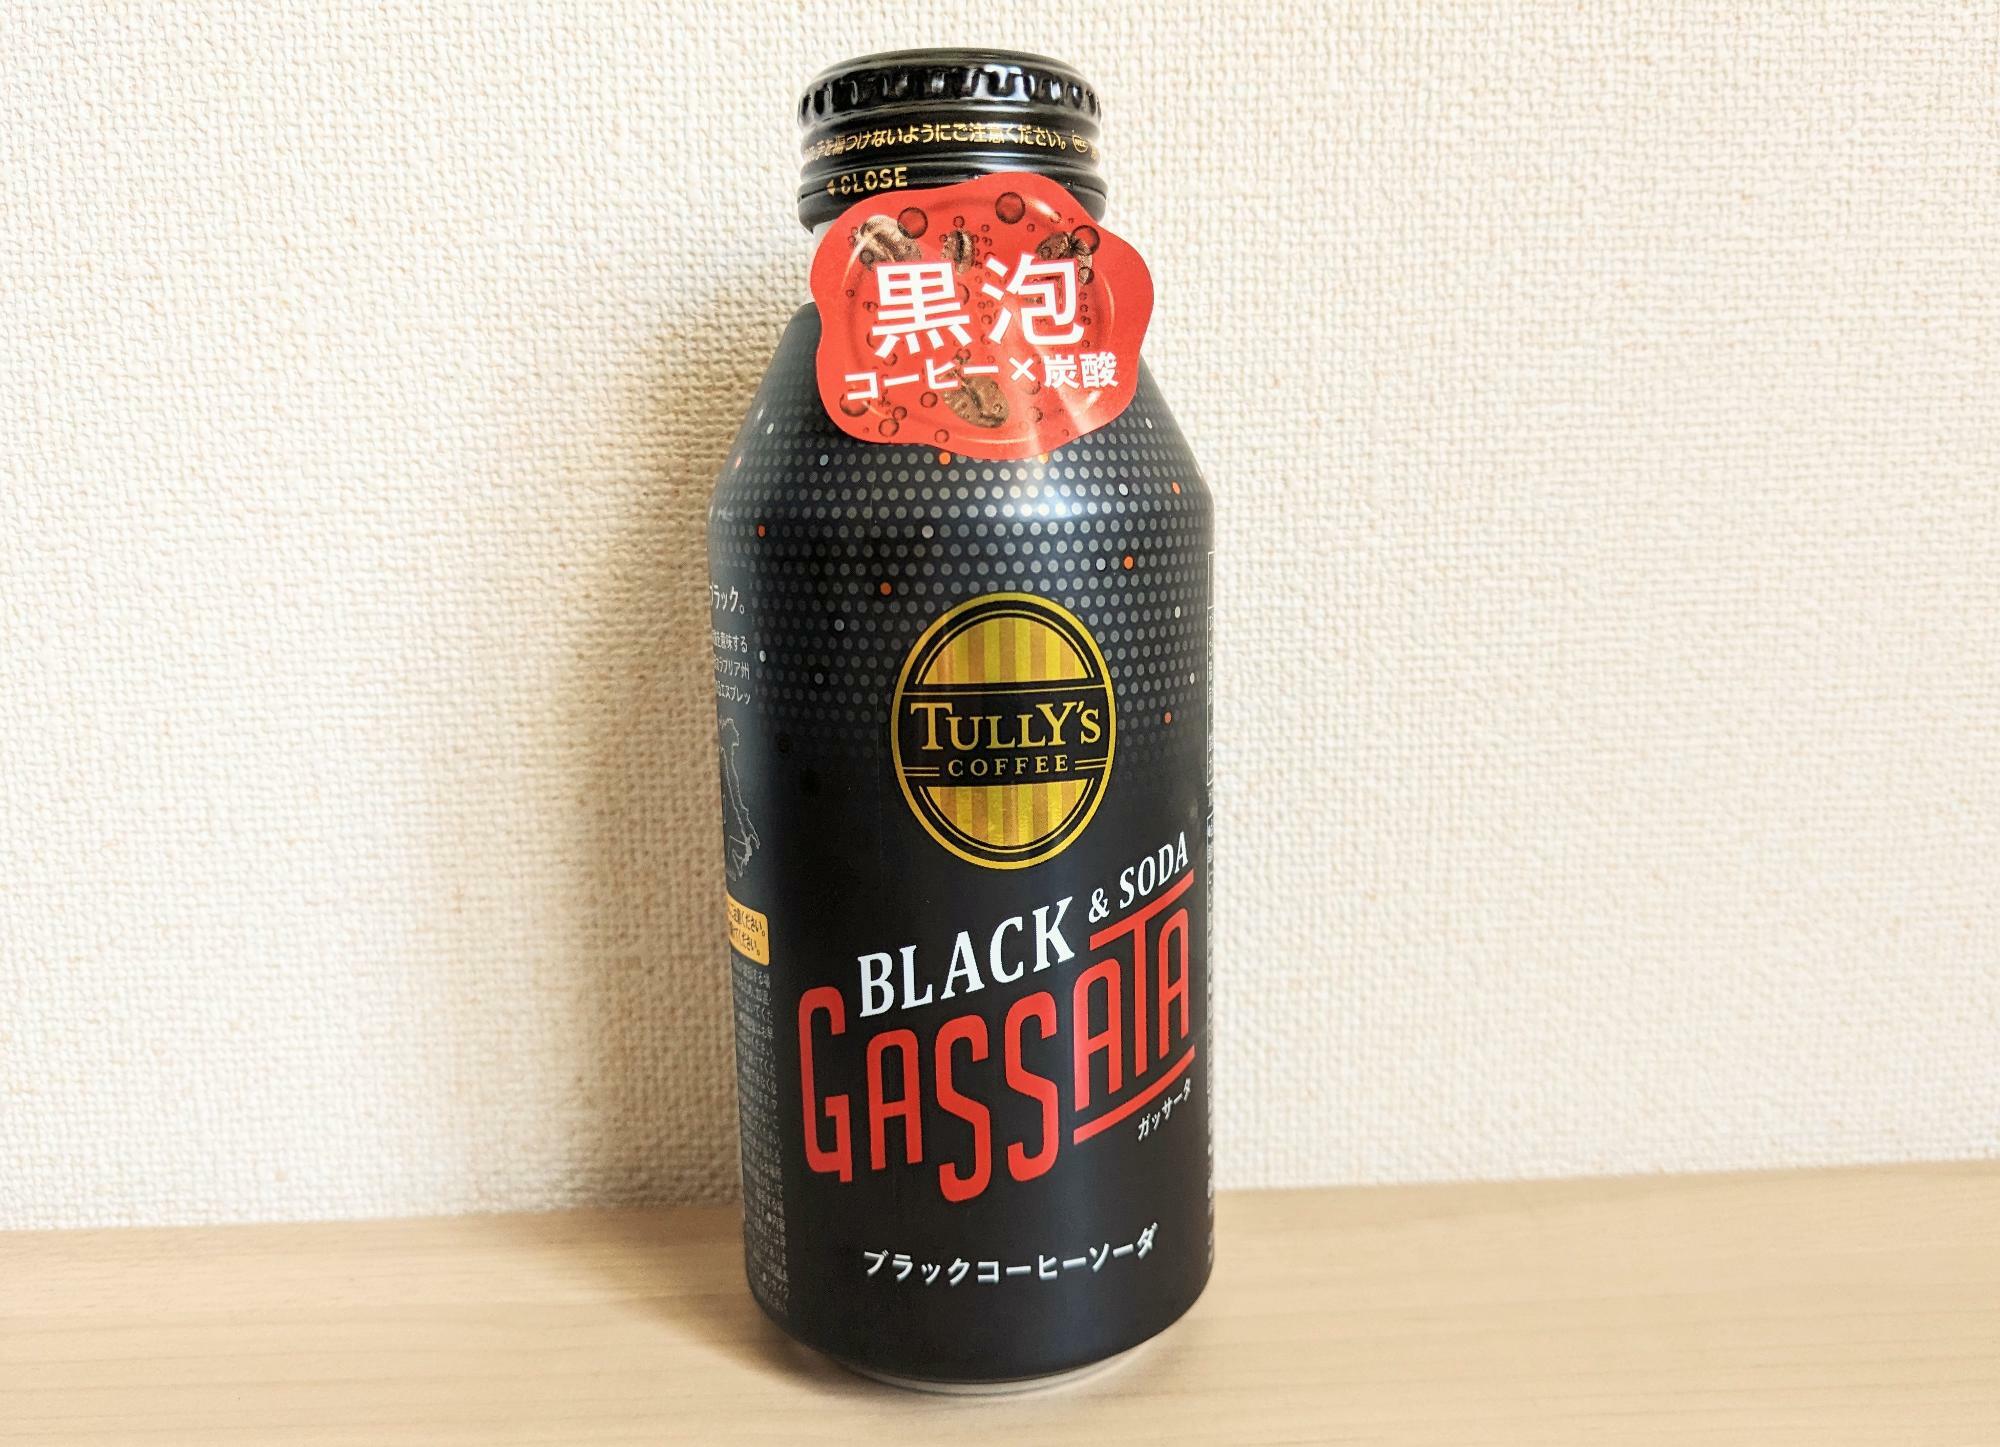 TULLY’S COFFEE BLACK&SODA GASSATA（ガッサータ）